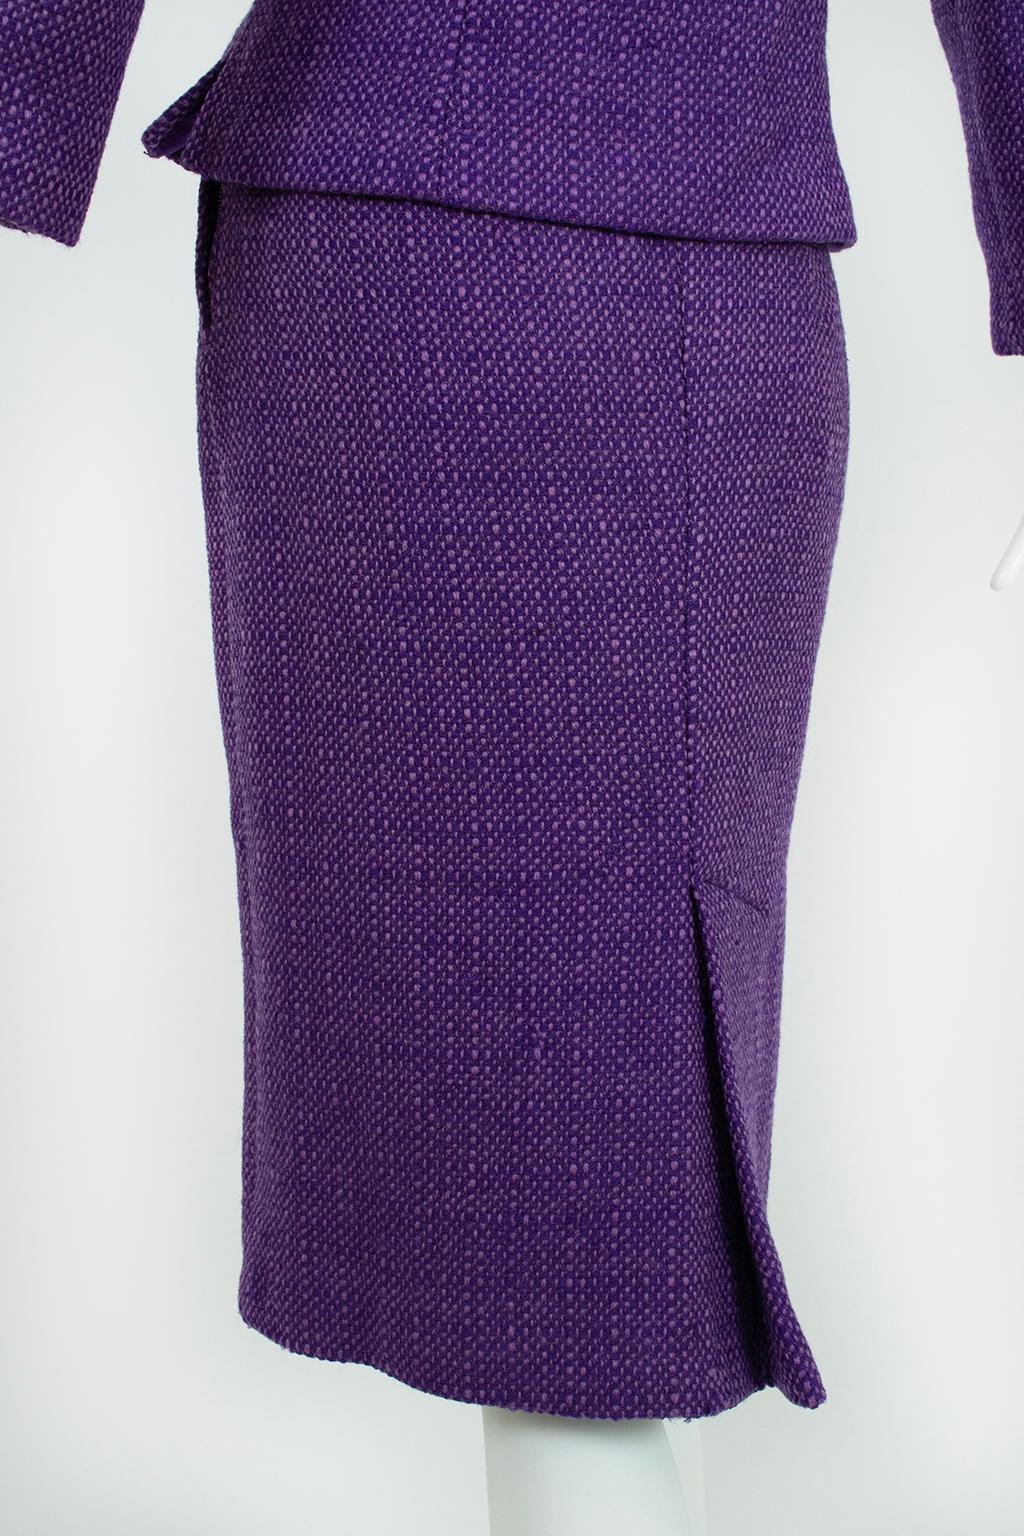 Purple Wool Tweed Portrait Collar ¾ Pencil Suit and Inverness Coat – M, 1950s 7